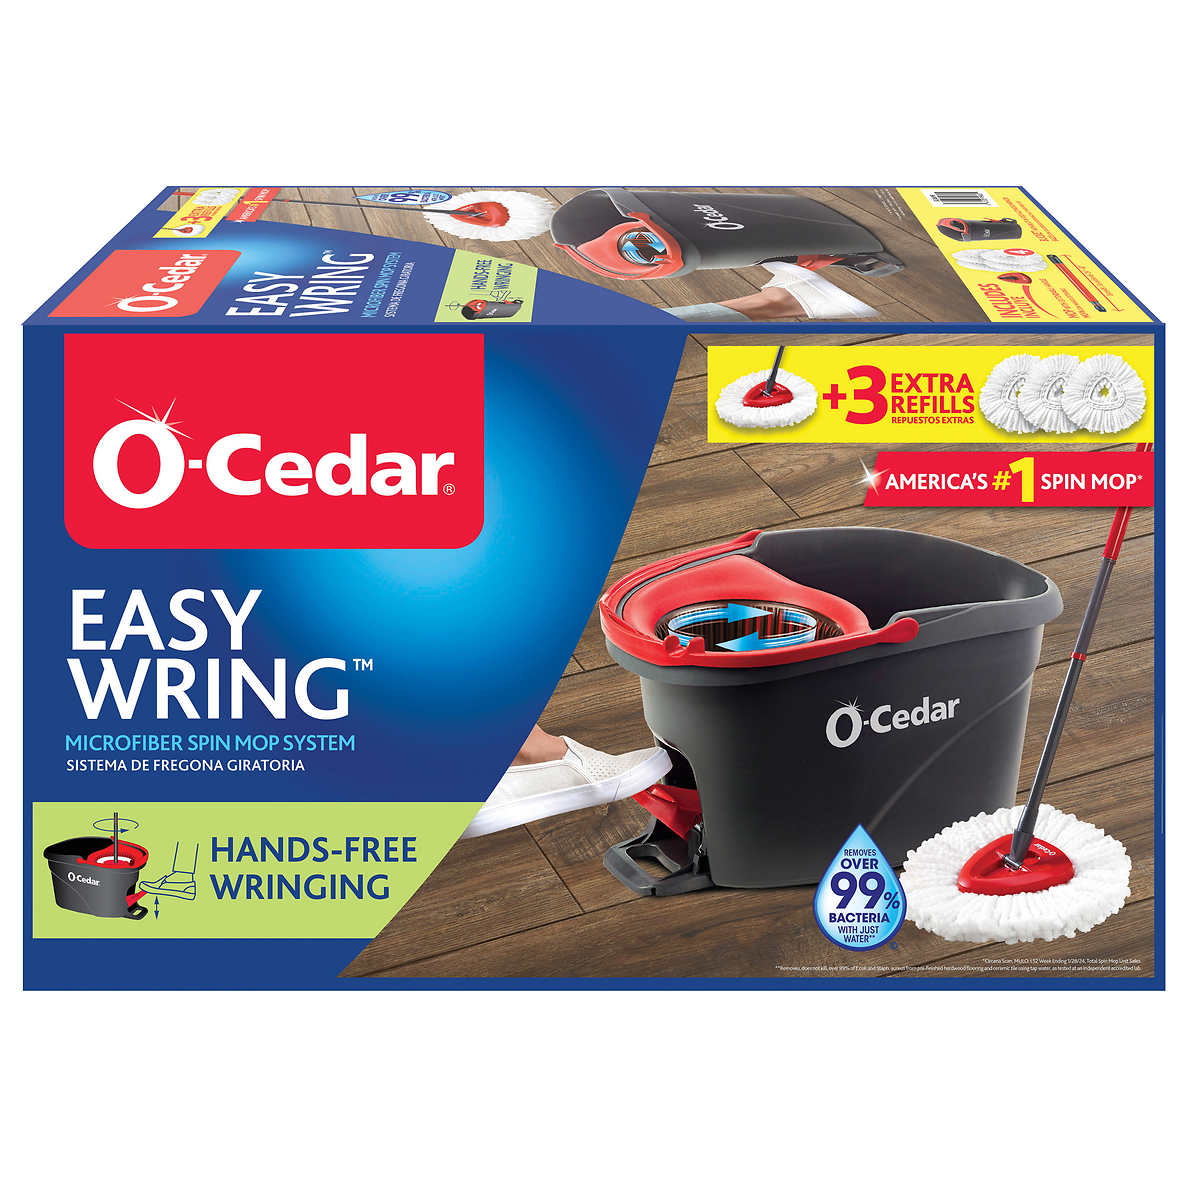 O-Cedar Quick Wring Bucket - 2.5 gal. (4-Pack), Red